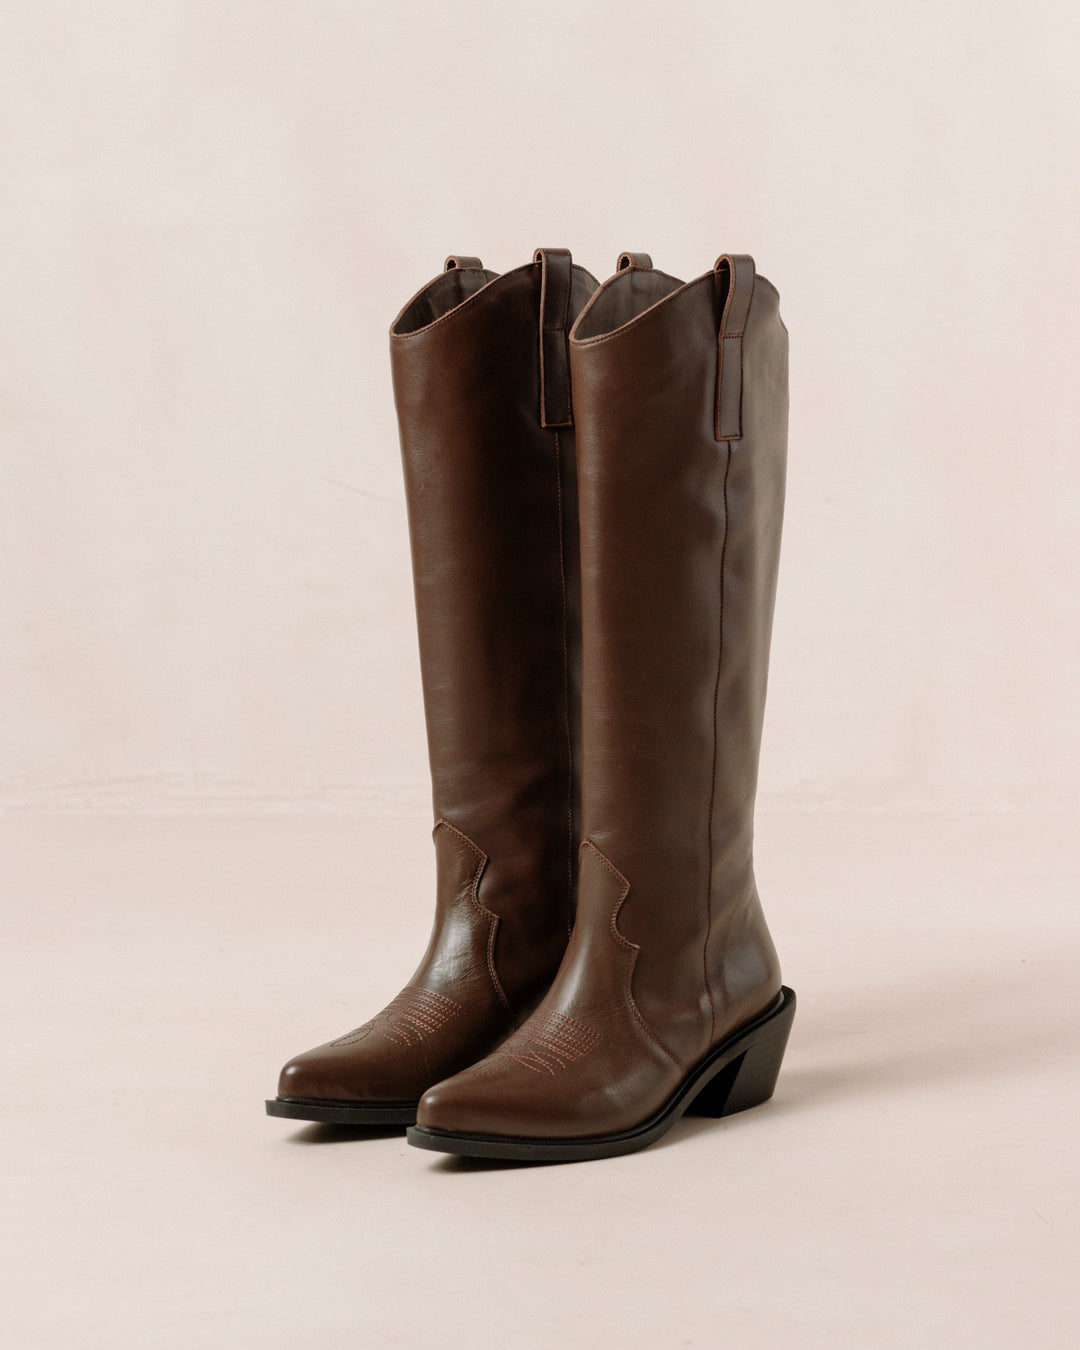 mount-coffee-brown-boots-alohas-585936_1080x_39b3c837-ead5-452f-b273-995a85d7456c.jpg